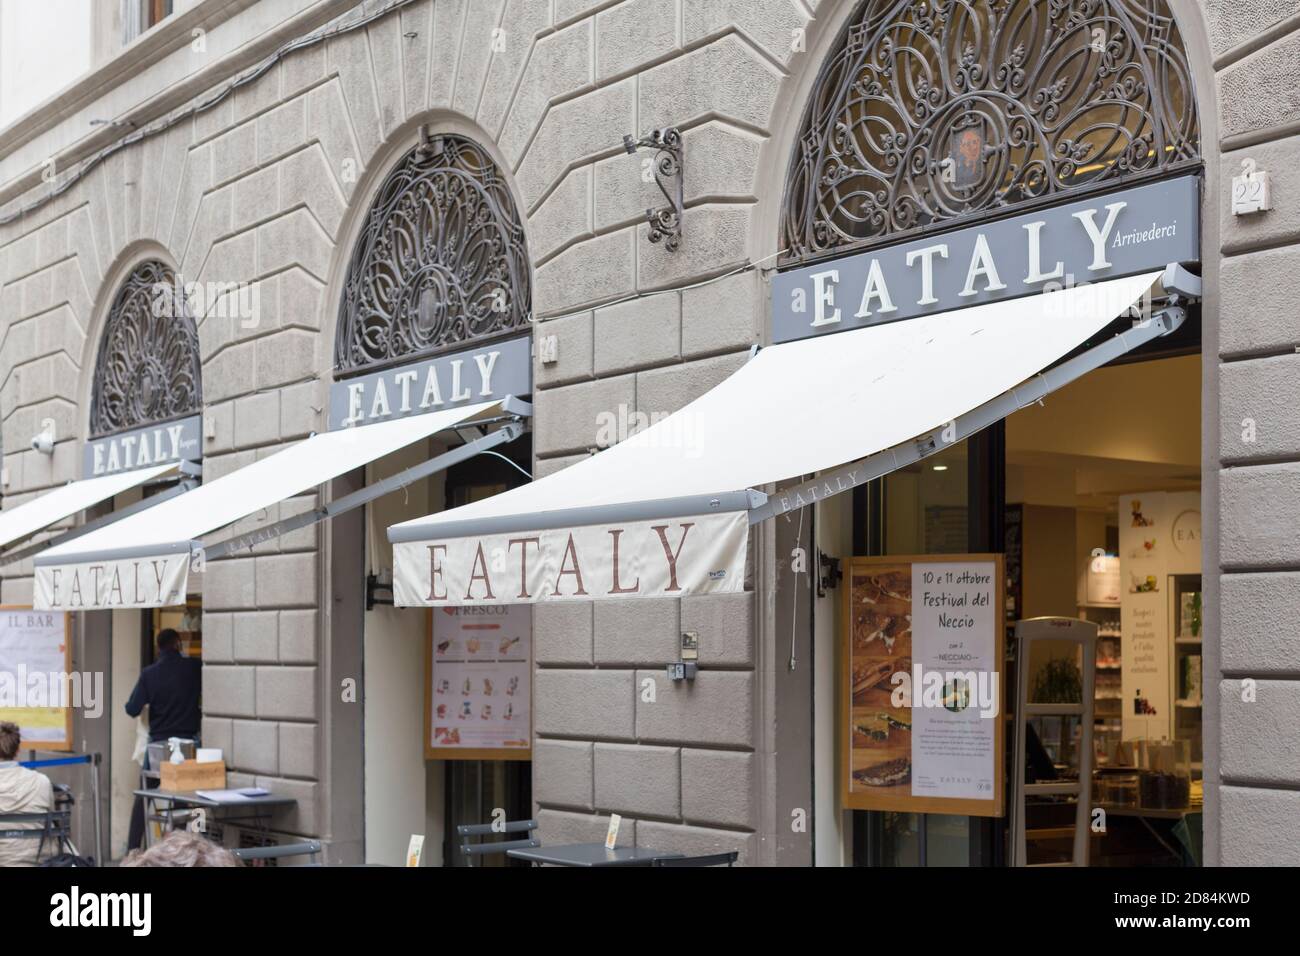 Eataly shop front, Italy Stock Photo